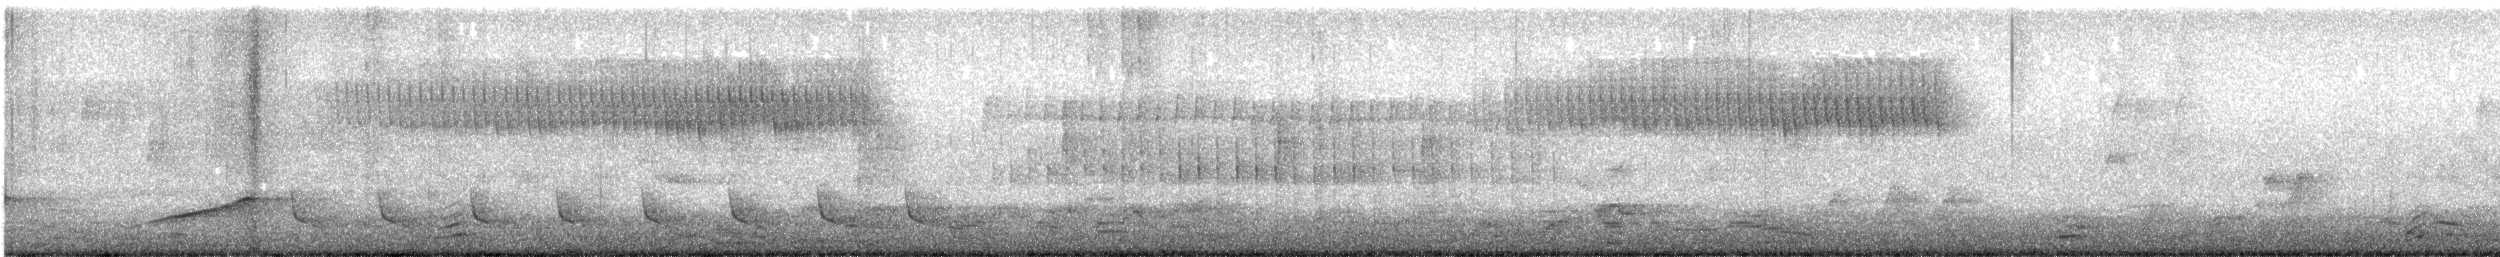 Paruline vermivore - ML152714721